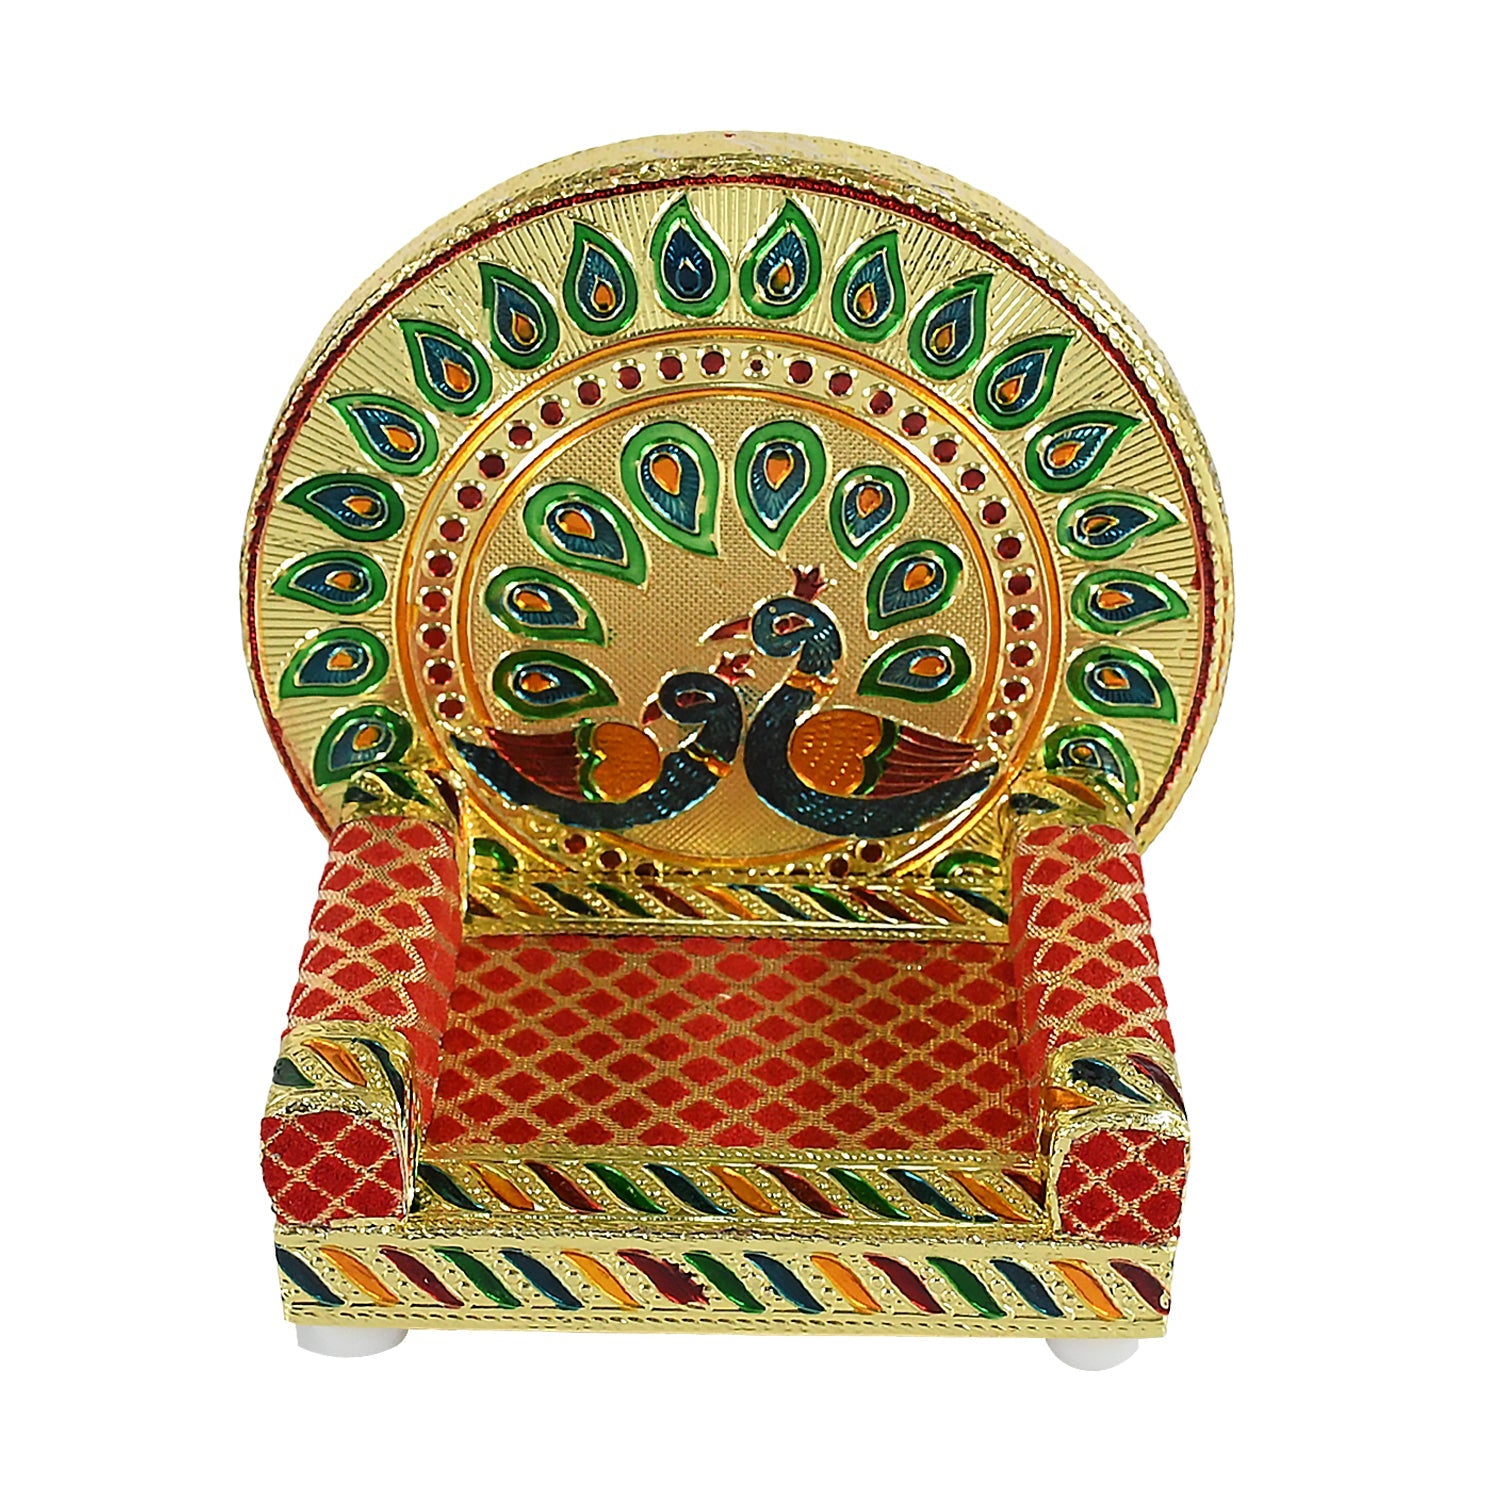 17697 Meenakari Work Laddu Gopal Singhasan for Pooja Mandir Wooden Krishna Ladoo Bal Gopal Sofa Asan, Home Decorative Premium Look Decorative Singhasan Suitable For Home, Office, Restaurant (2 Pc Set)